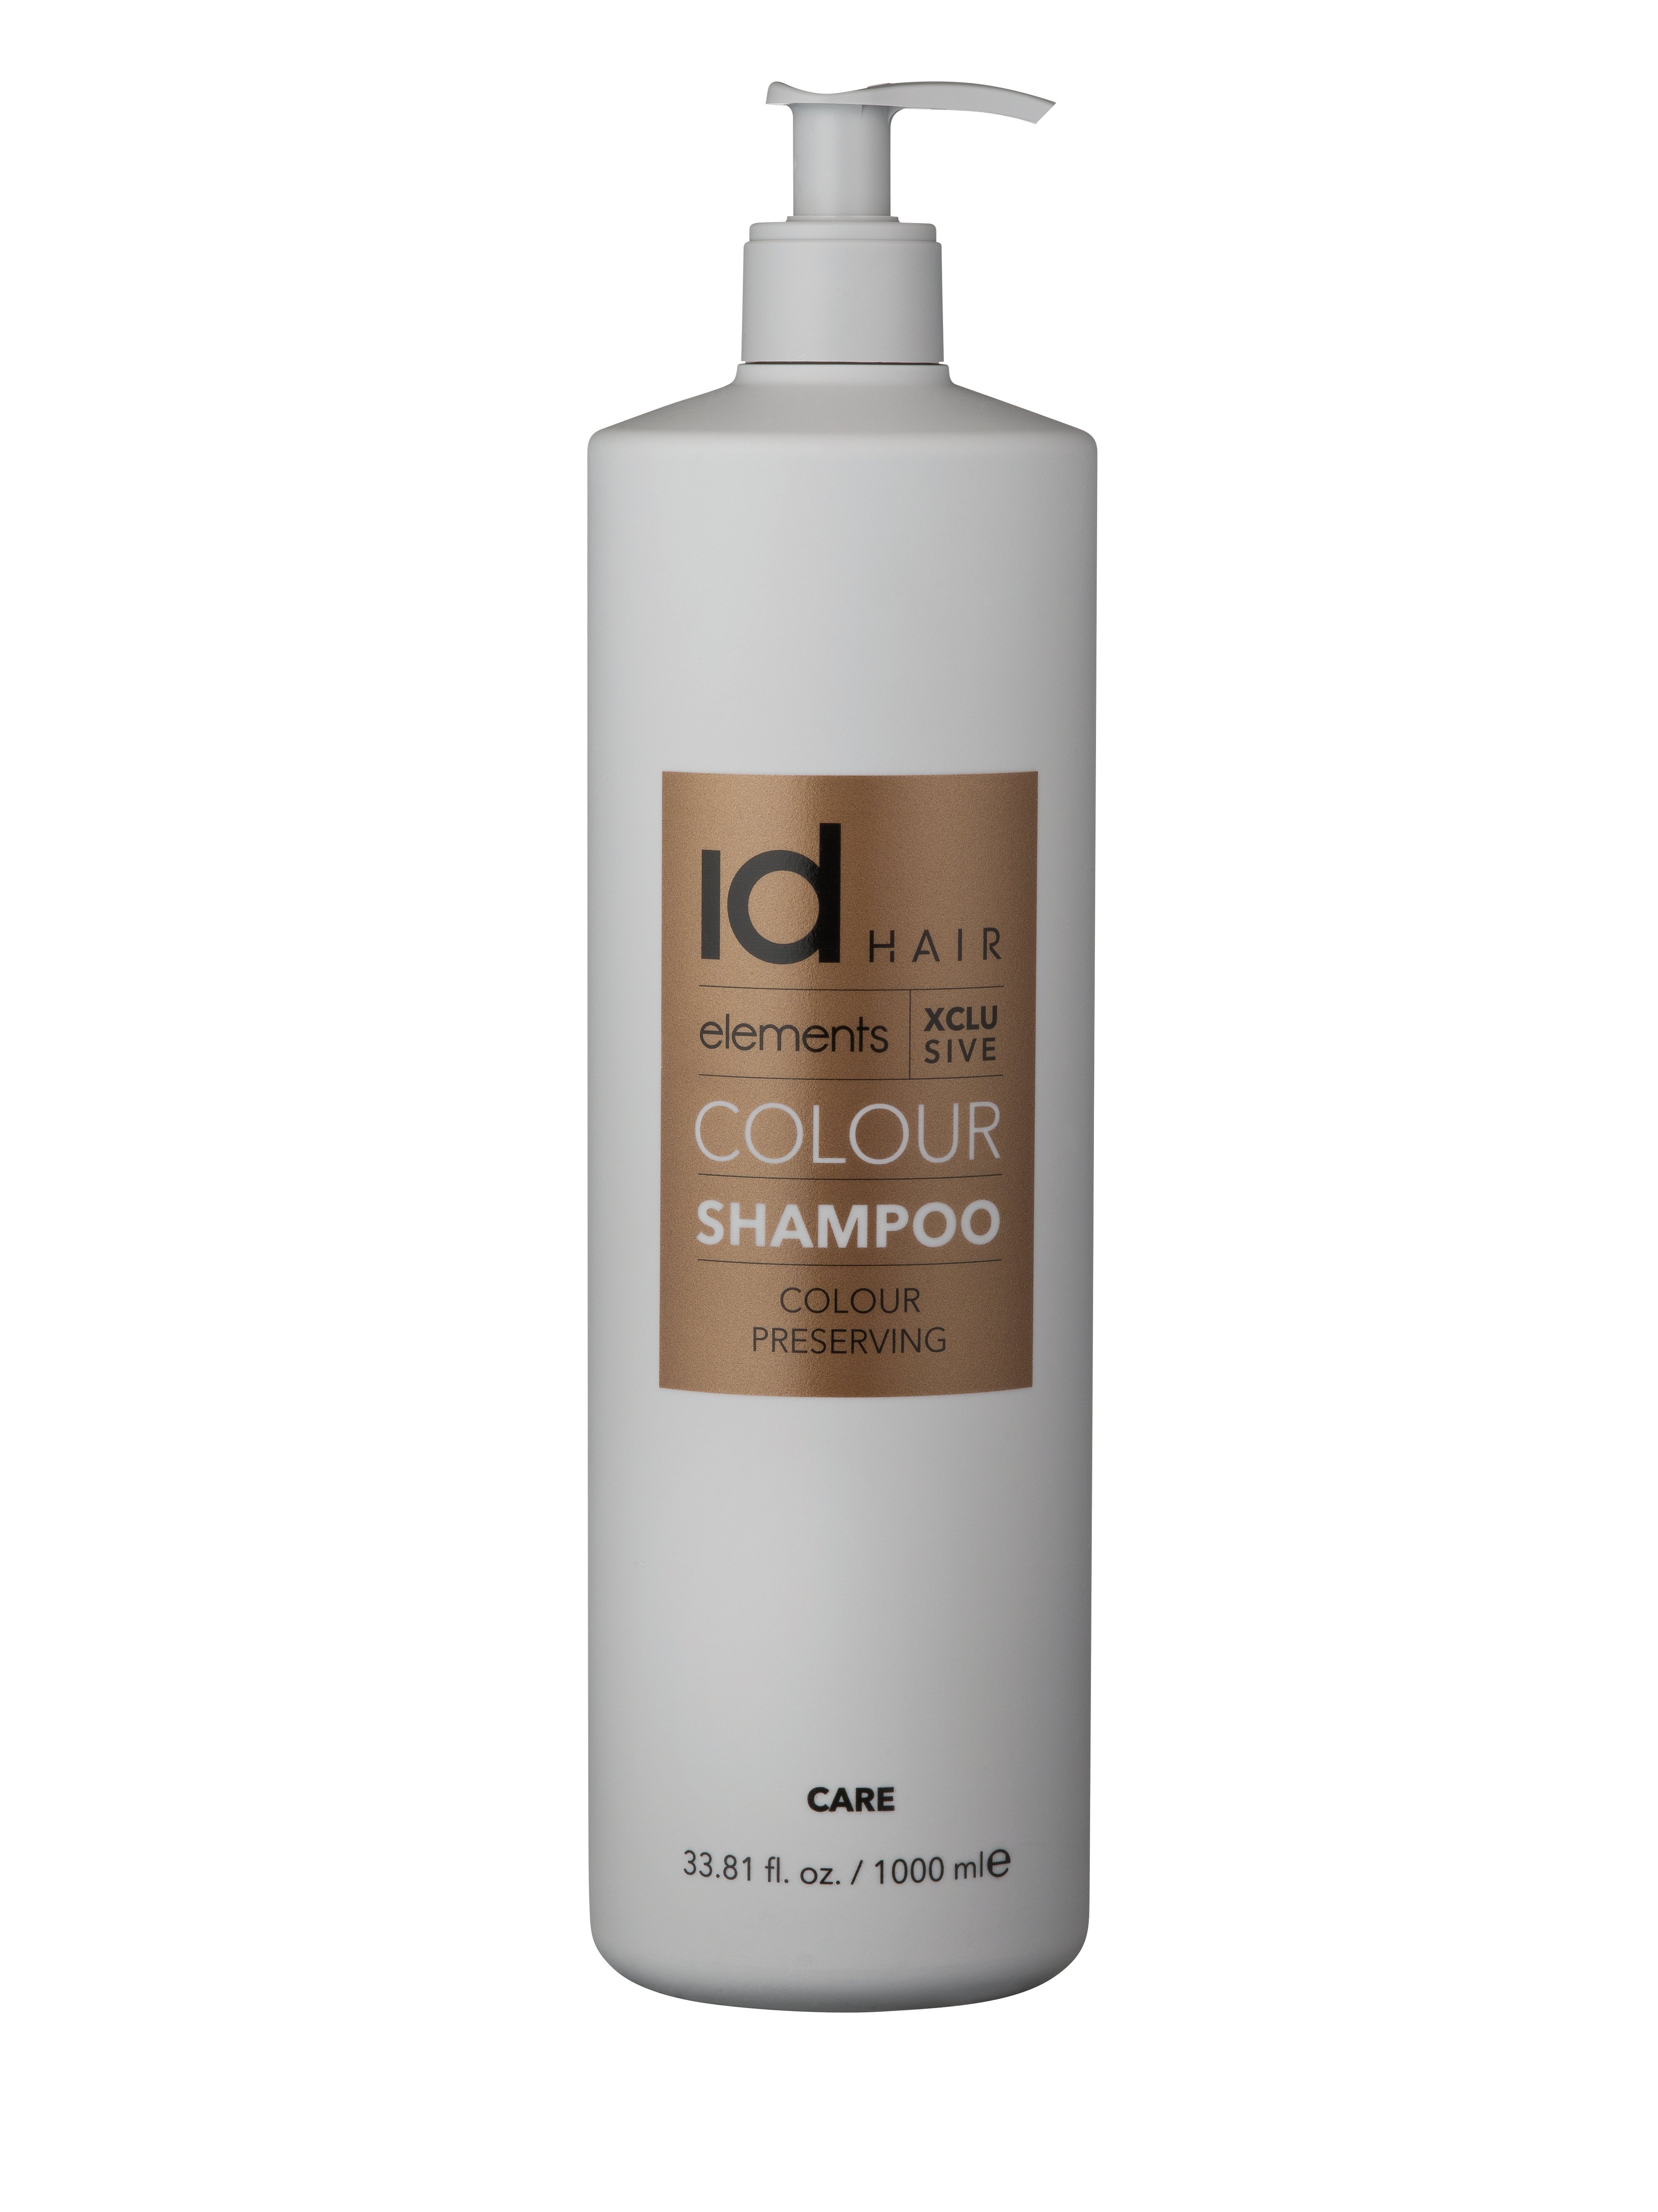 IdHAIR - Elements Xclusive Colour Shampoo 1000 ml - Skjønnhet